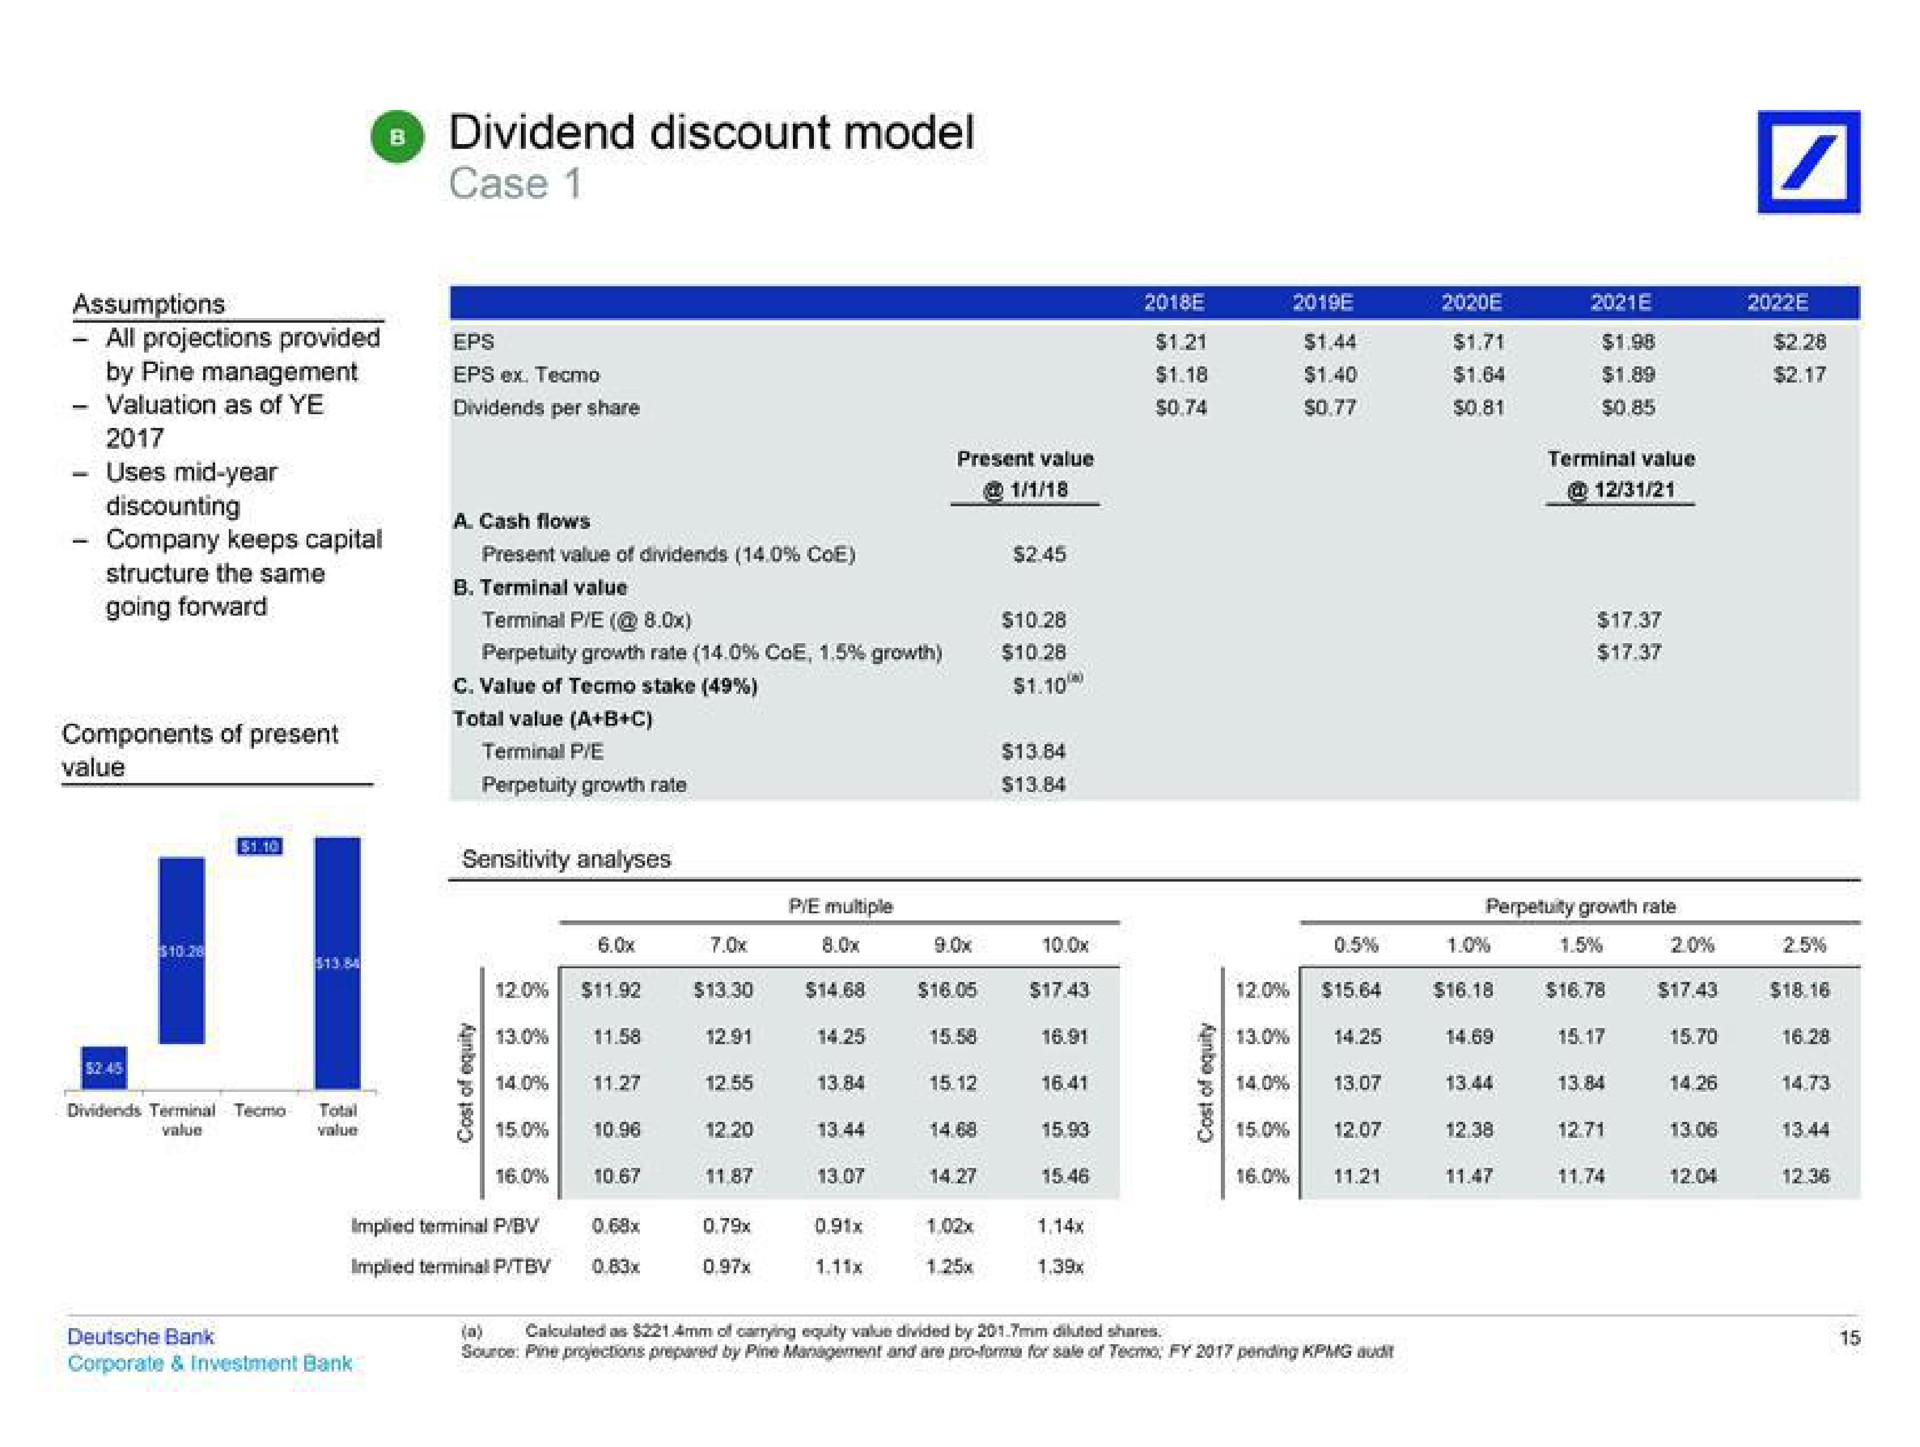 dividend discount model case cash flows sensitivity analyses | Deutsche Bank